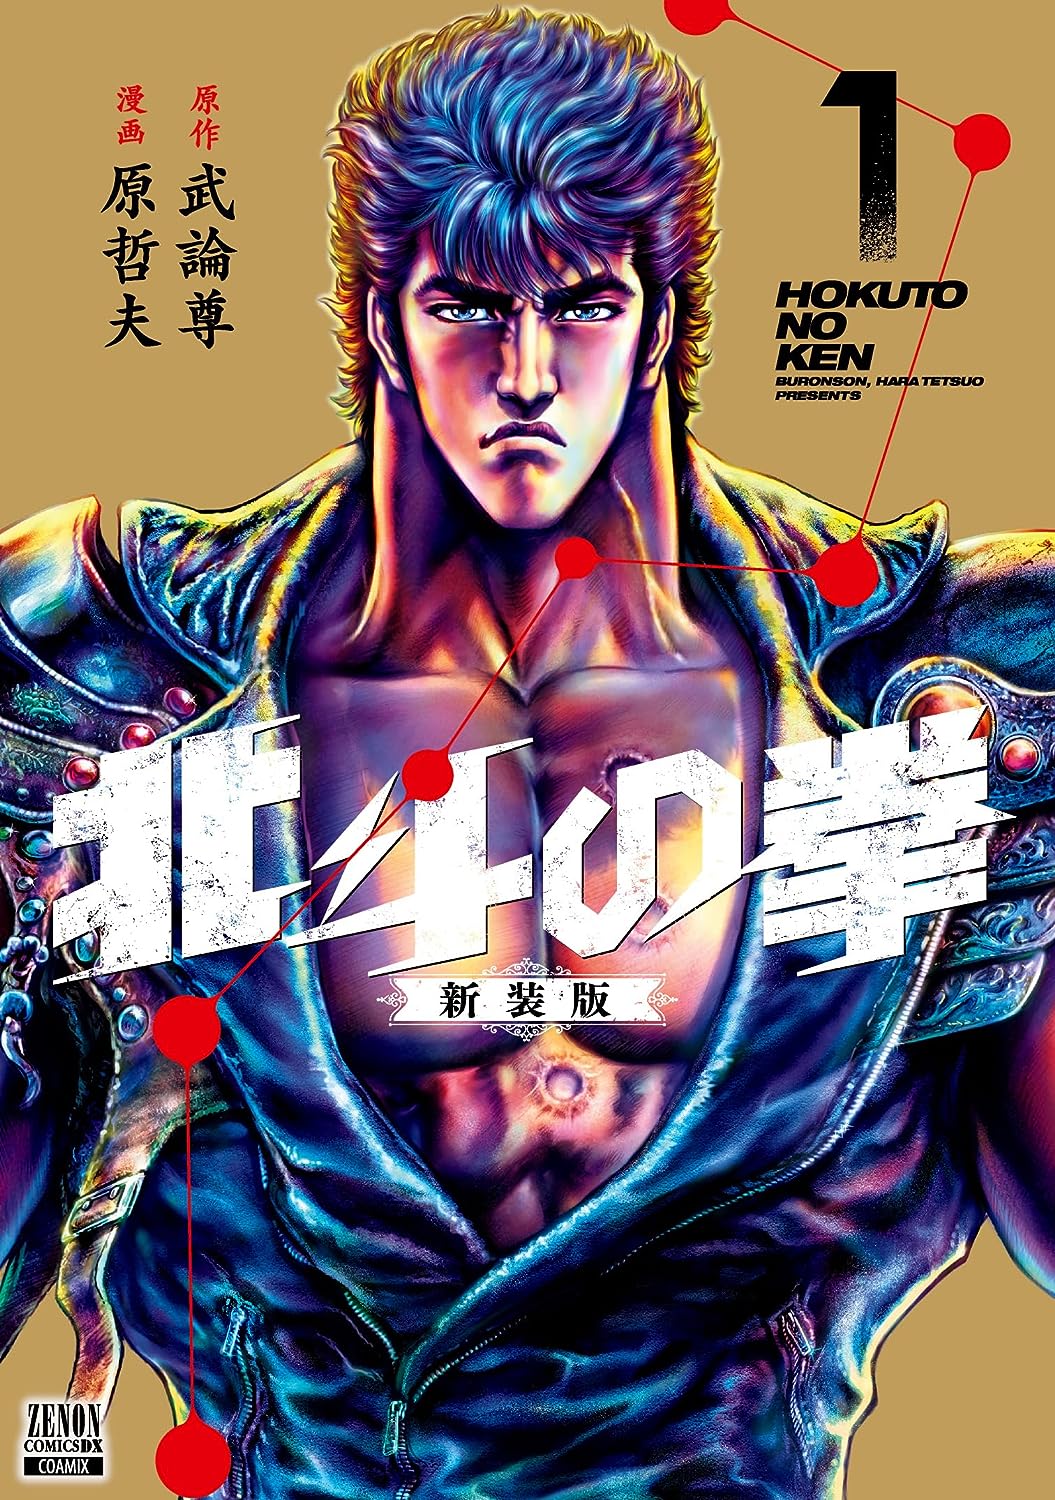 Hokuto no Ken (Fist of the North Star) #1  / Comic